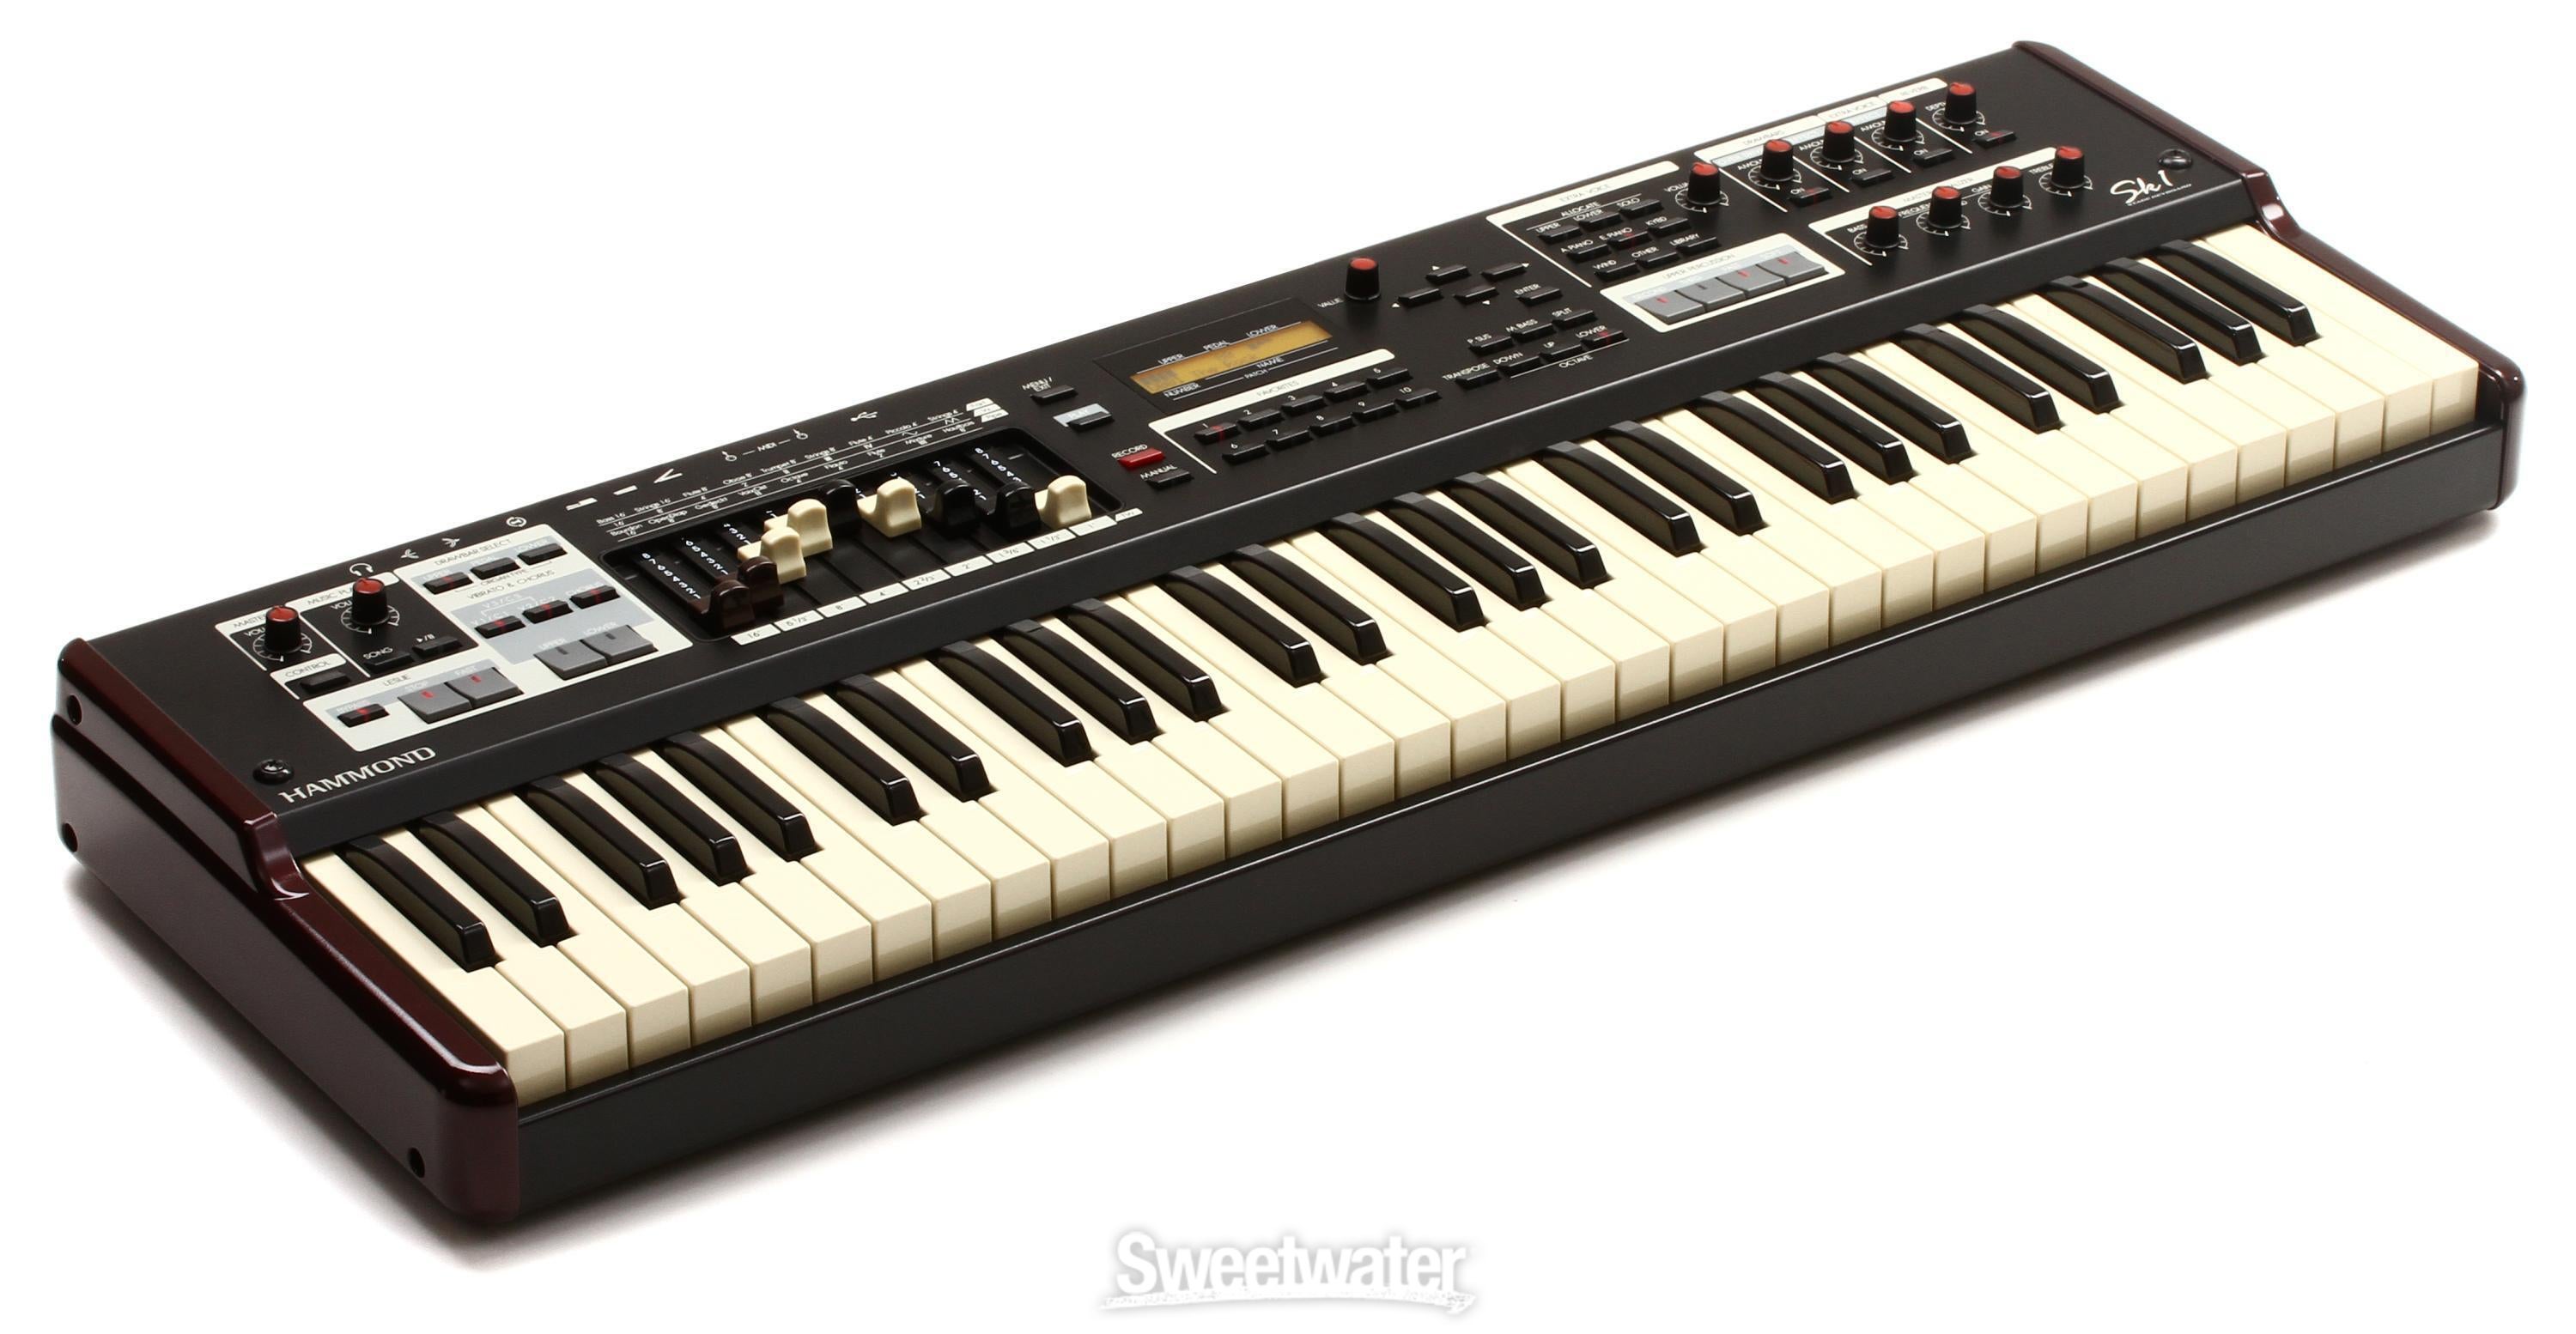 Hammond Sk1 61-key Portable Organ | Sweetwater